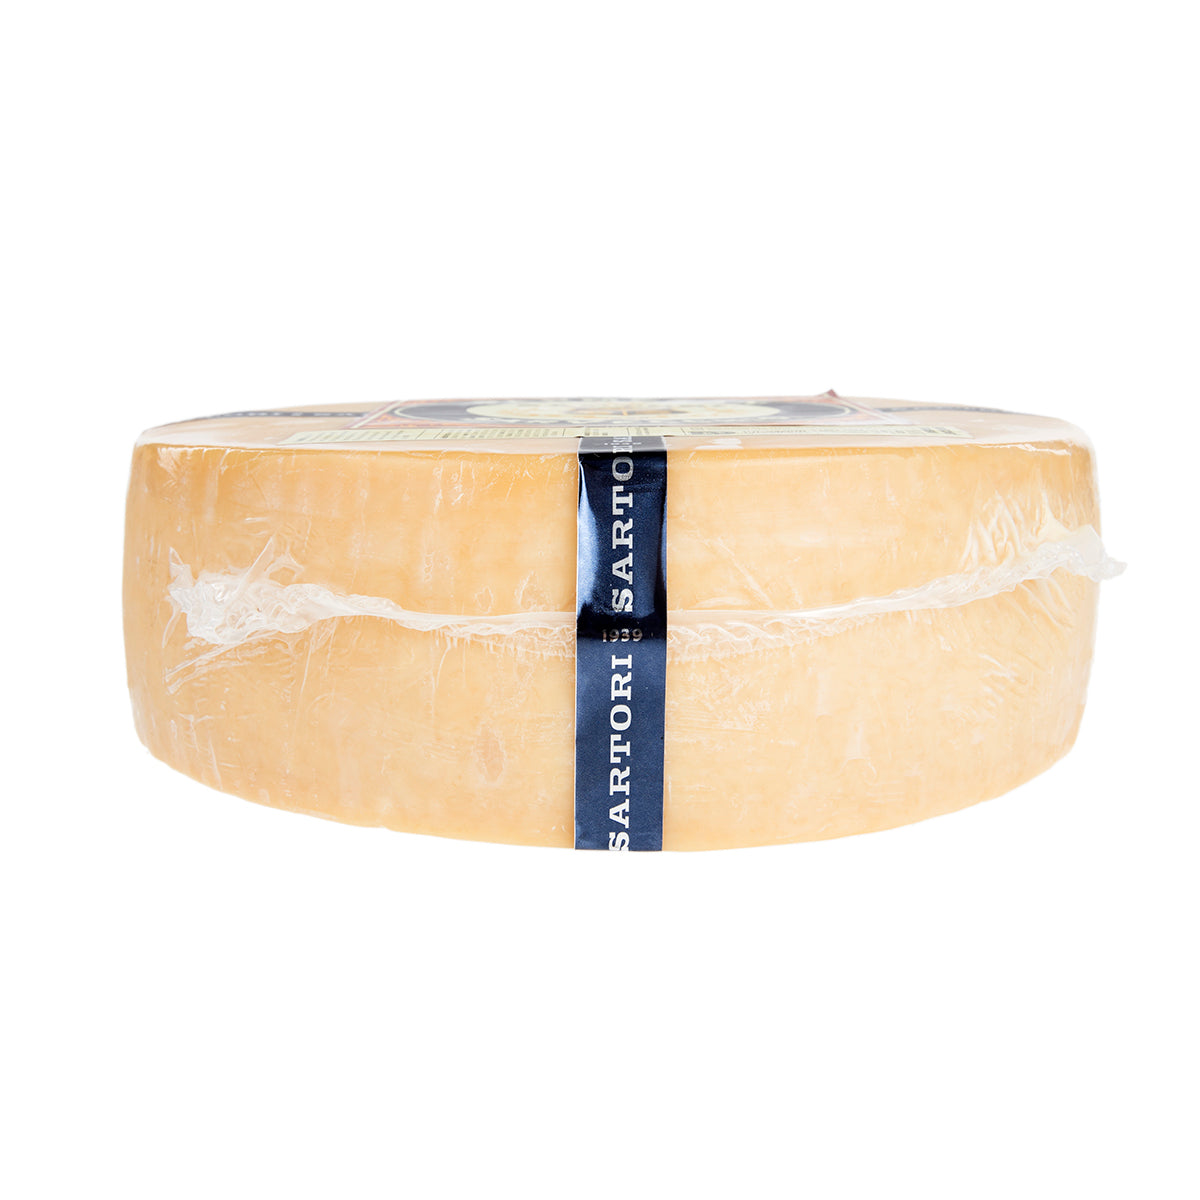 Sartori Sarvecchio Parmesan 24 Months Cheese